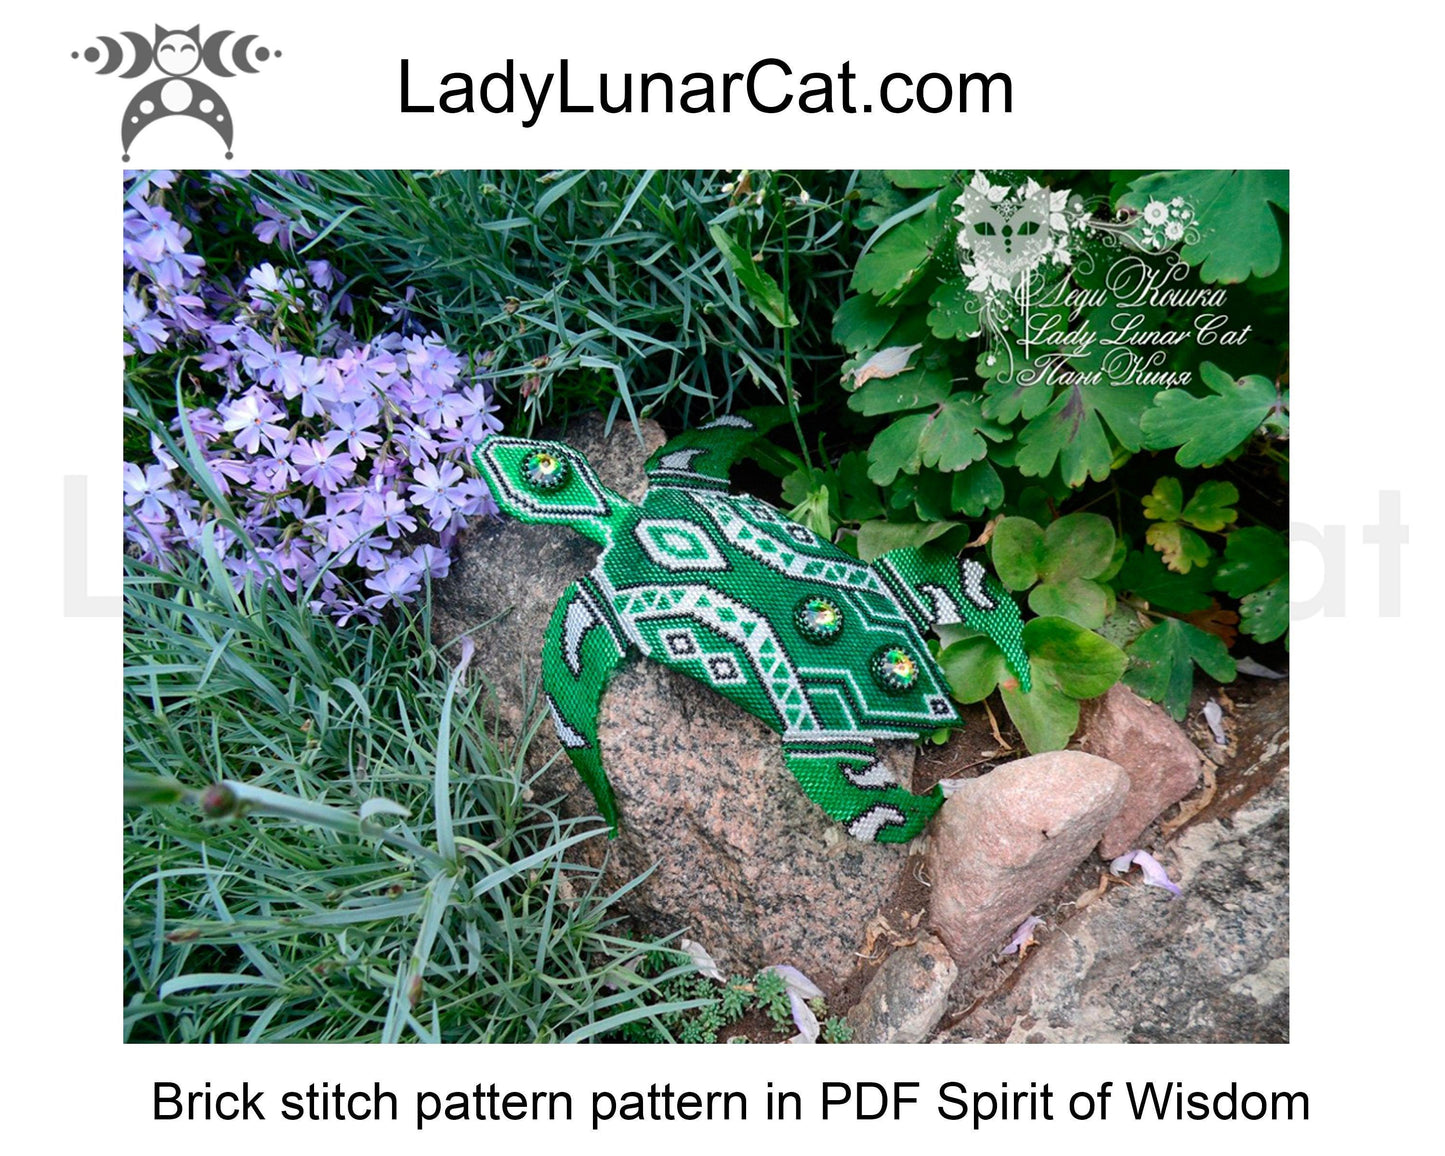 Brick stitch beading pattern Green sea turtle LadyLunarCat